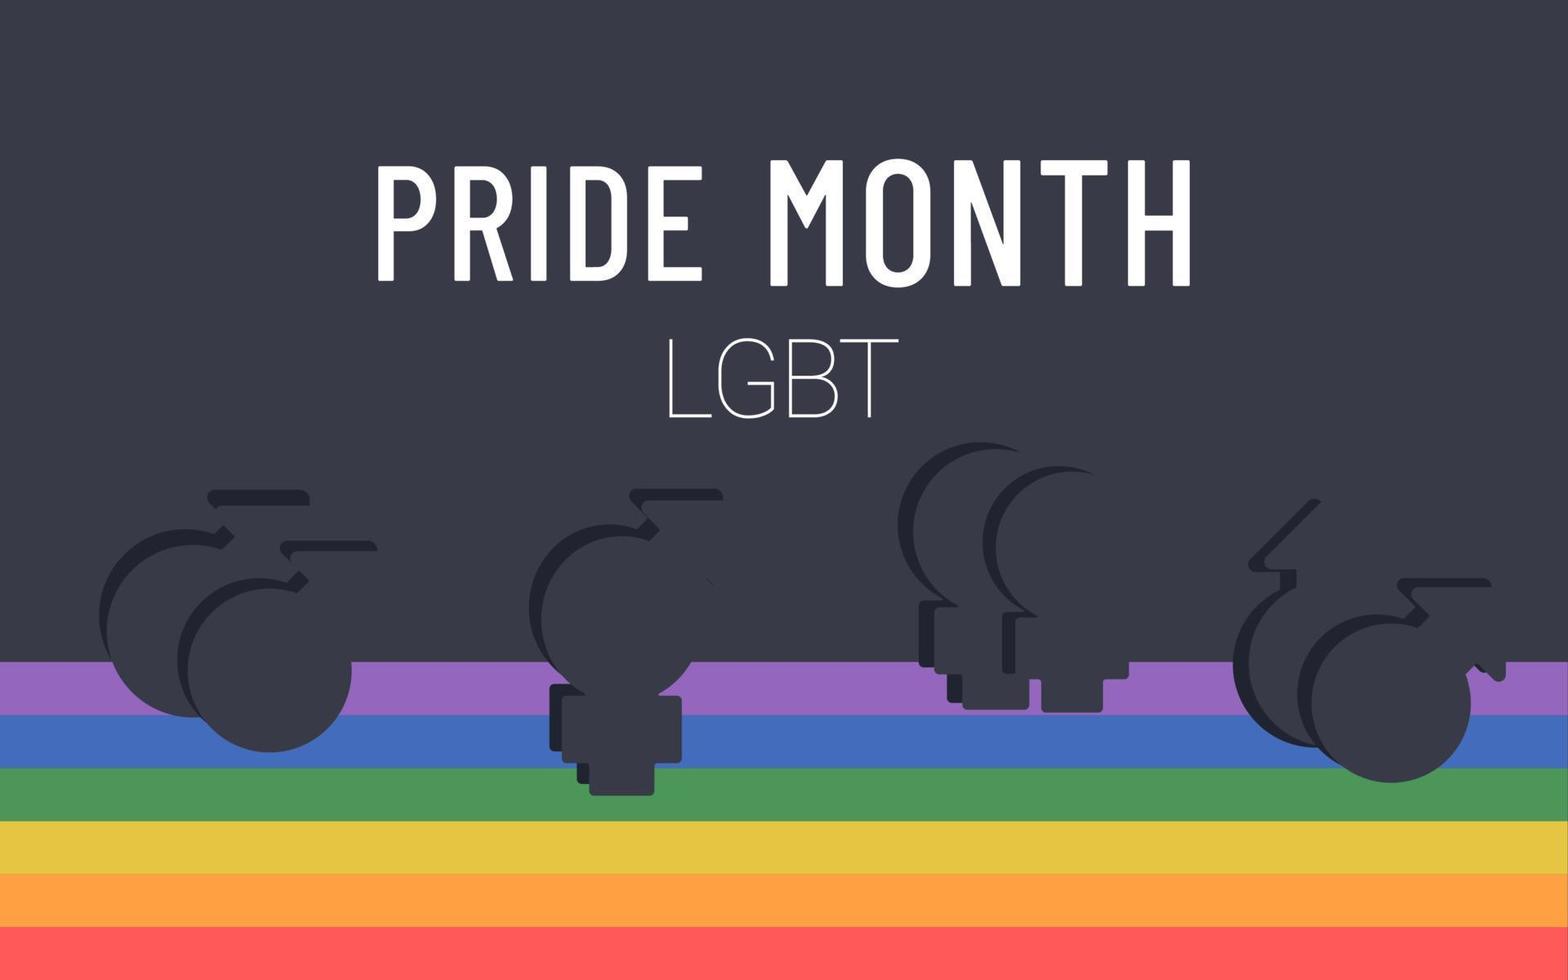 Lgbt pride month. Lgbt community, flag, rainbow, emblem, parade. Human rights concept. Vector flat illustration for poster, flyer, card, banner